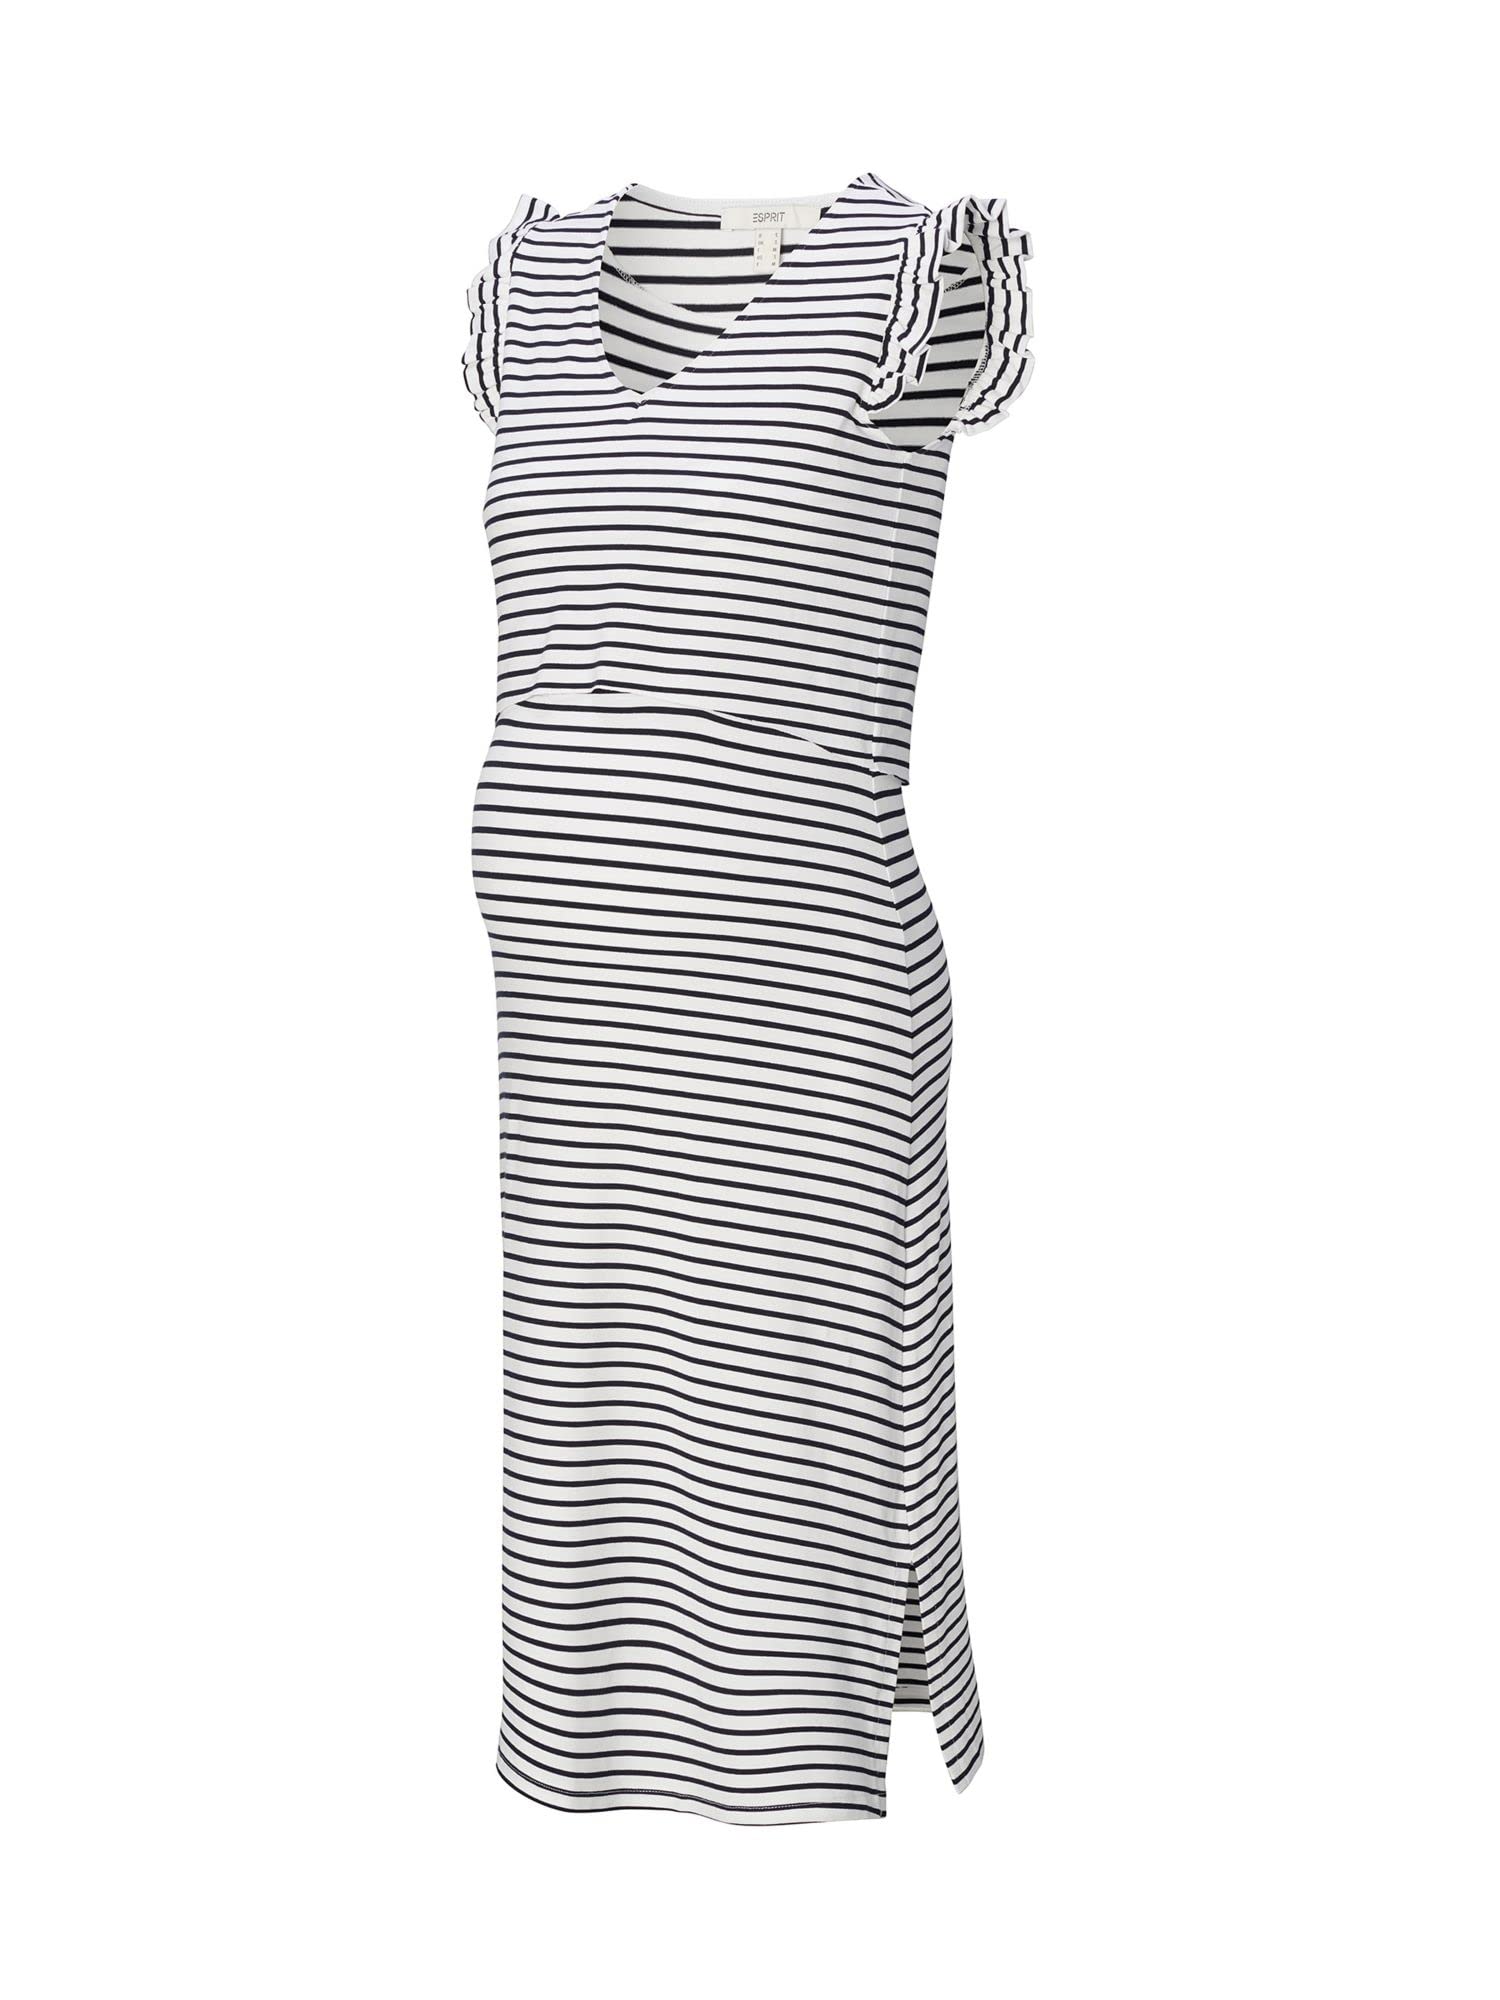 ESPRIT Damen Dress Nursing Sleeveless Stripe Kleid, Blau-485, XXL